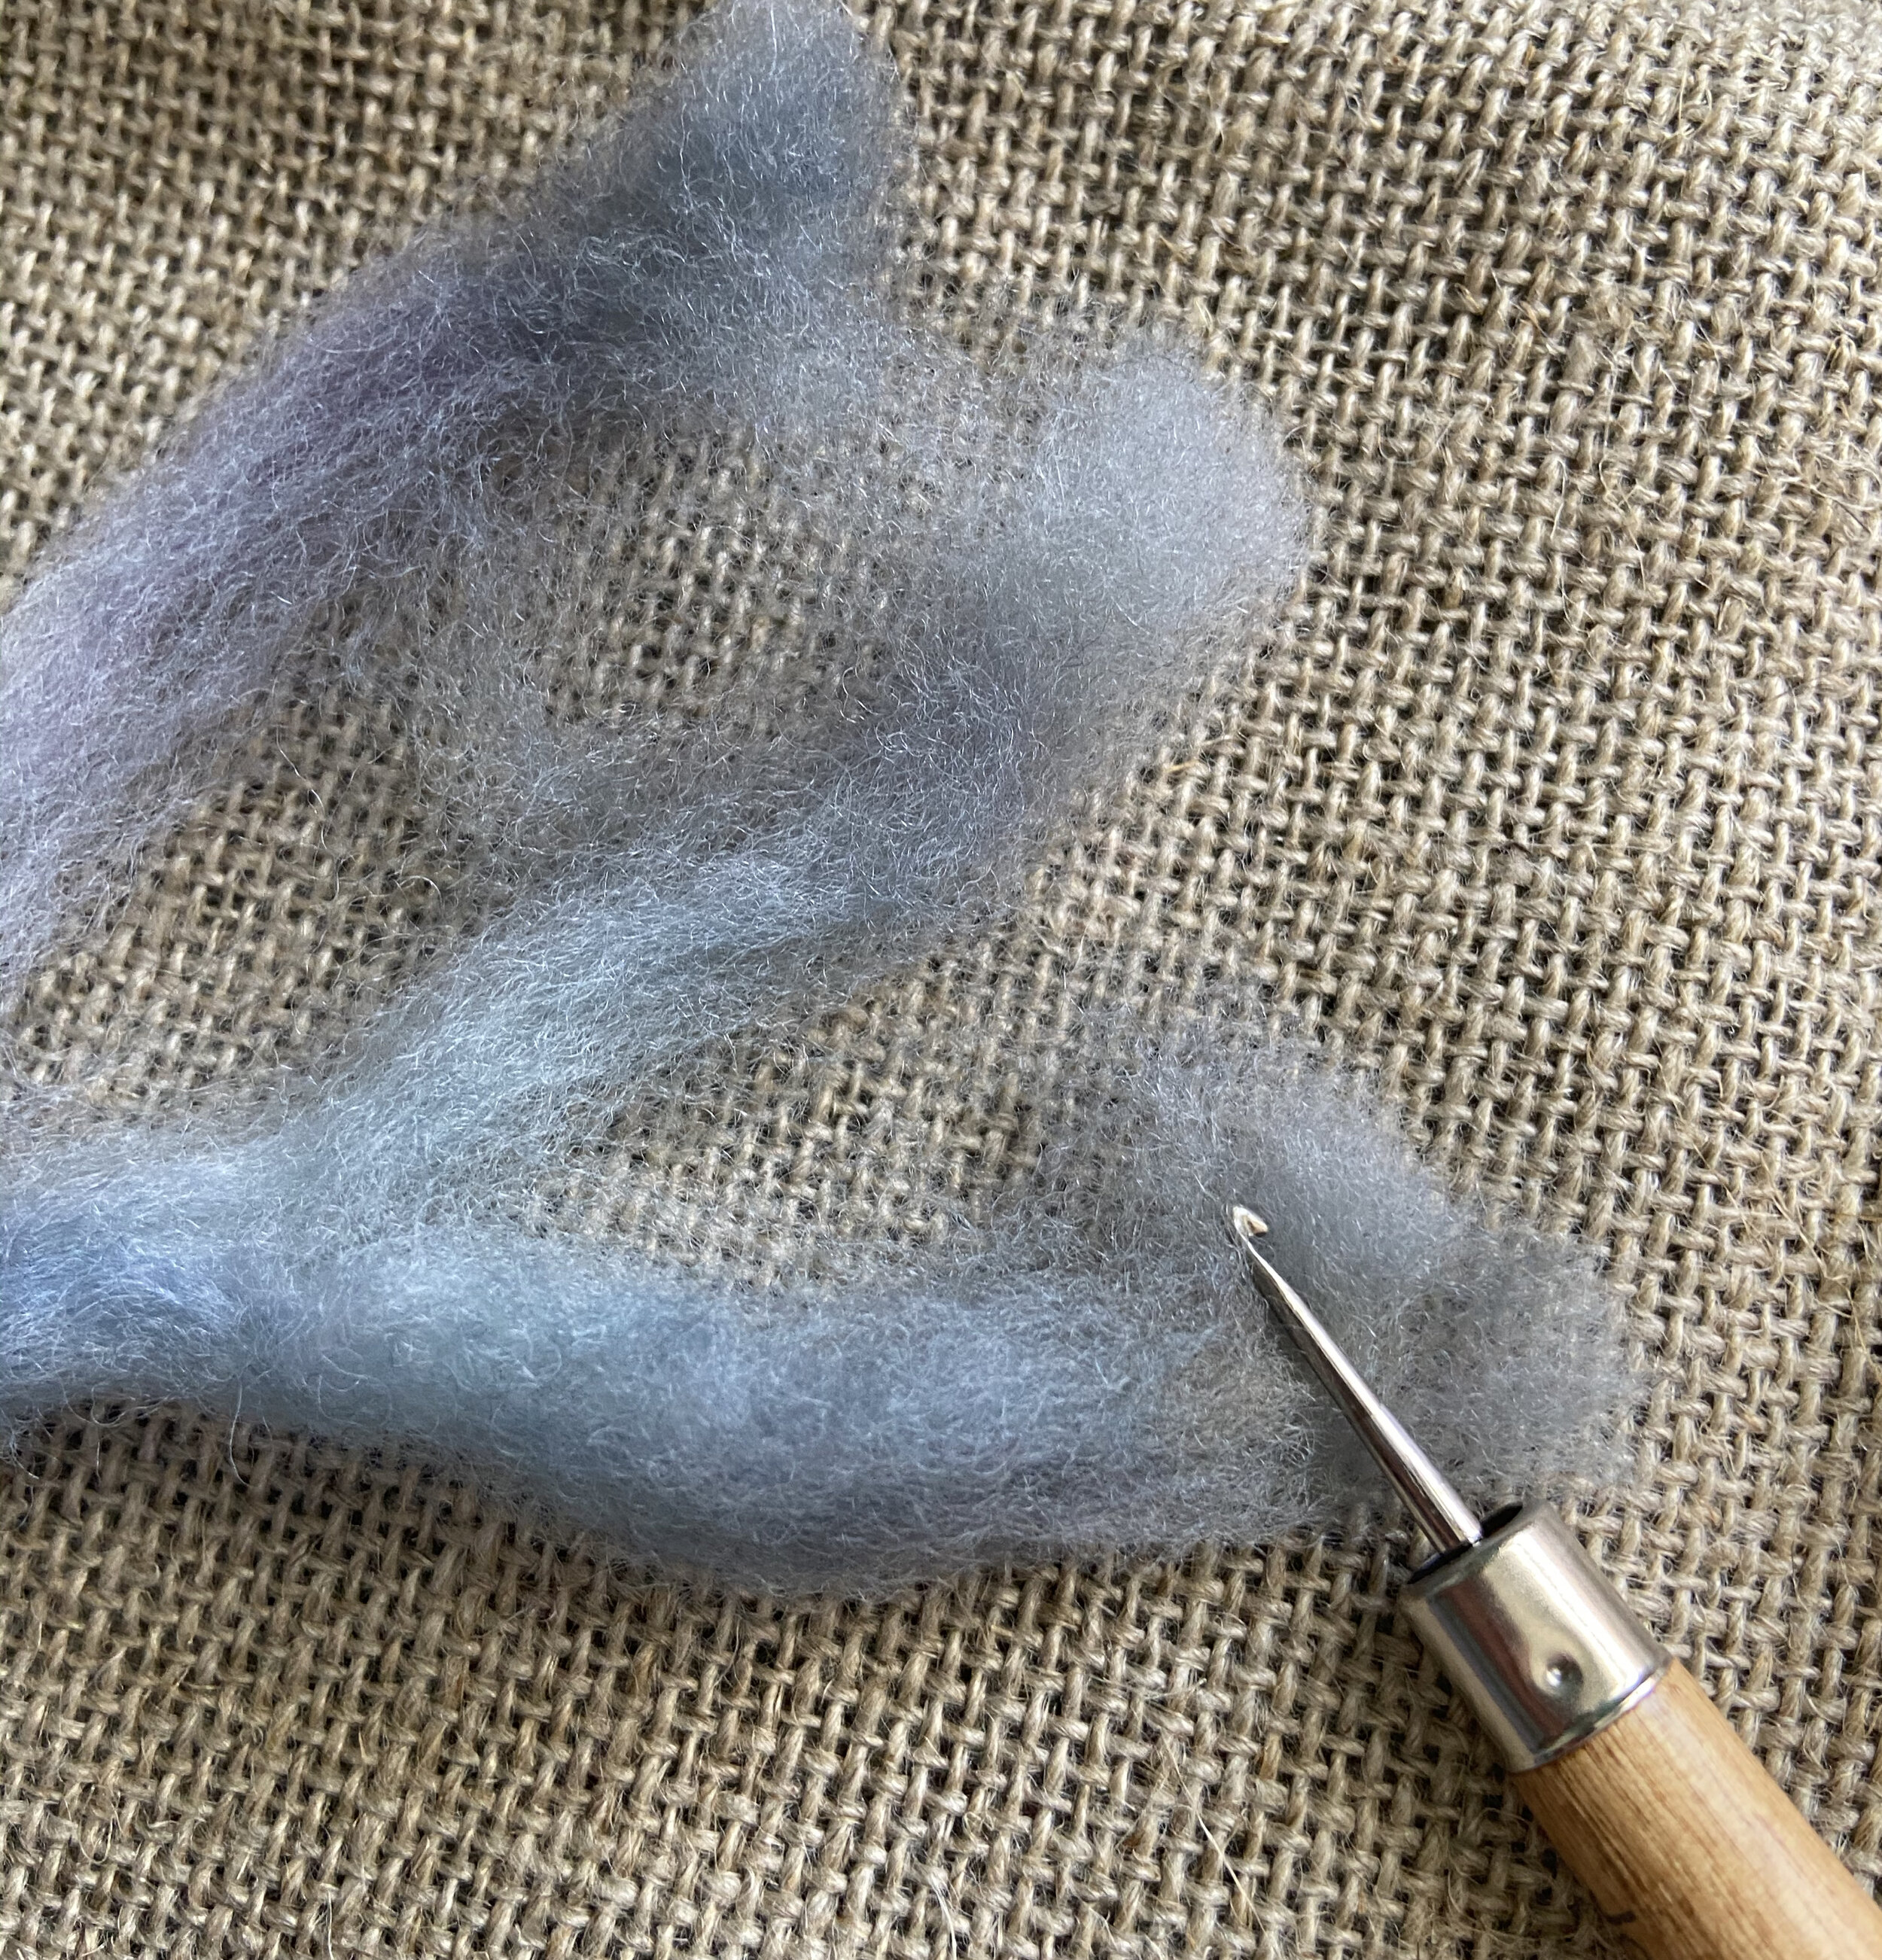 Hand-Dyed Shetland Wool Roving, Colorado-Grown, 4 oz. – Dyers Wool